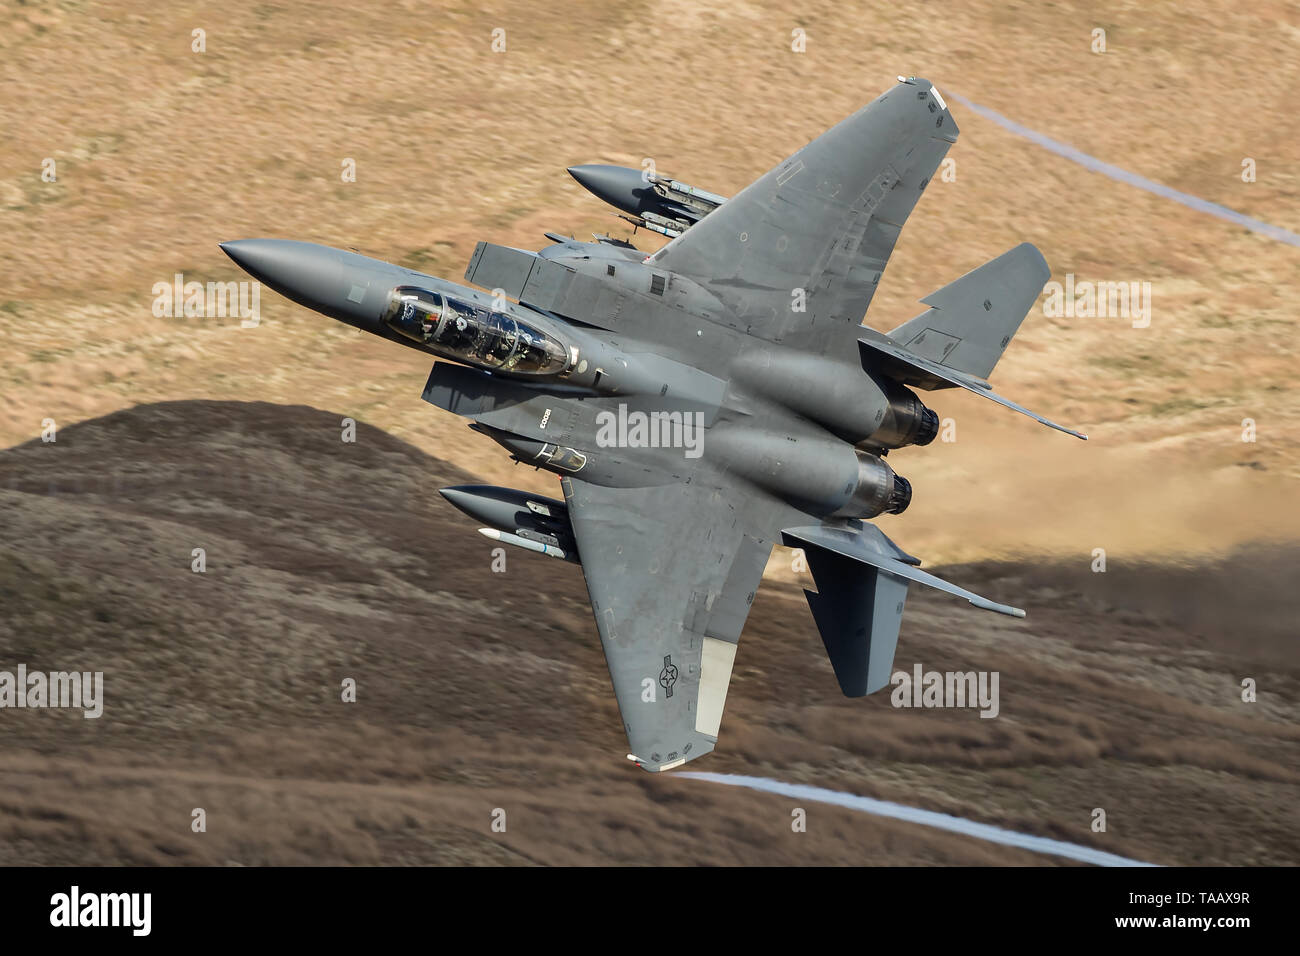 Un USAF F-15E Strike Eagle sale del Bwlch salir del bucle de Mach en Gales, Reino Unido Foto de stock